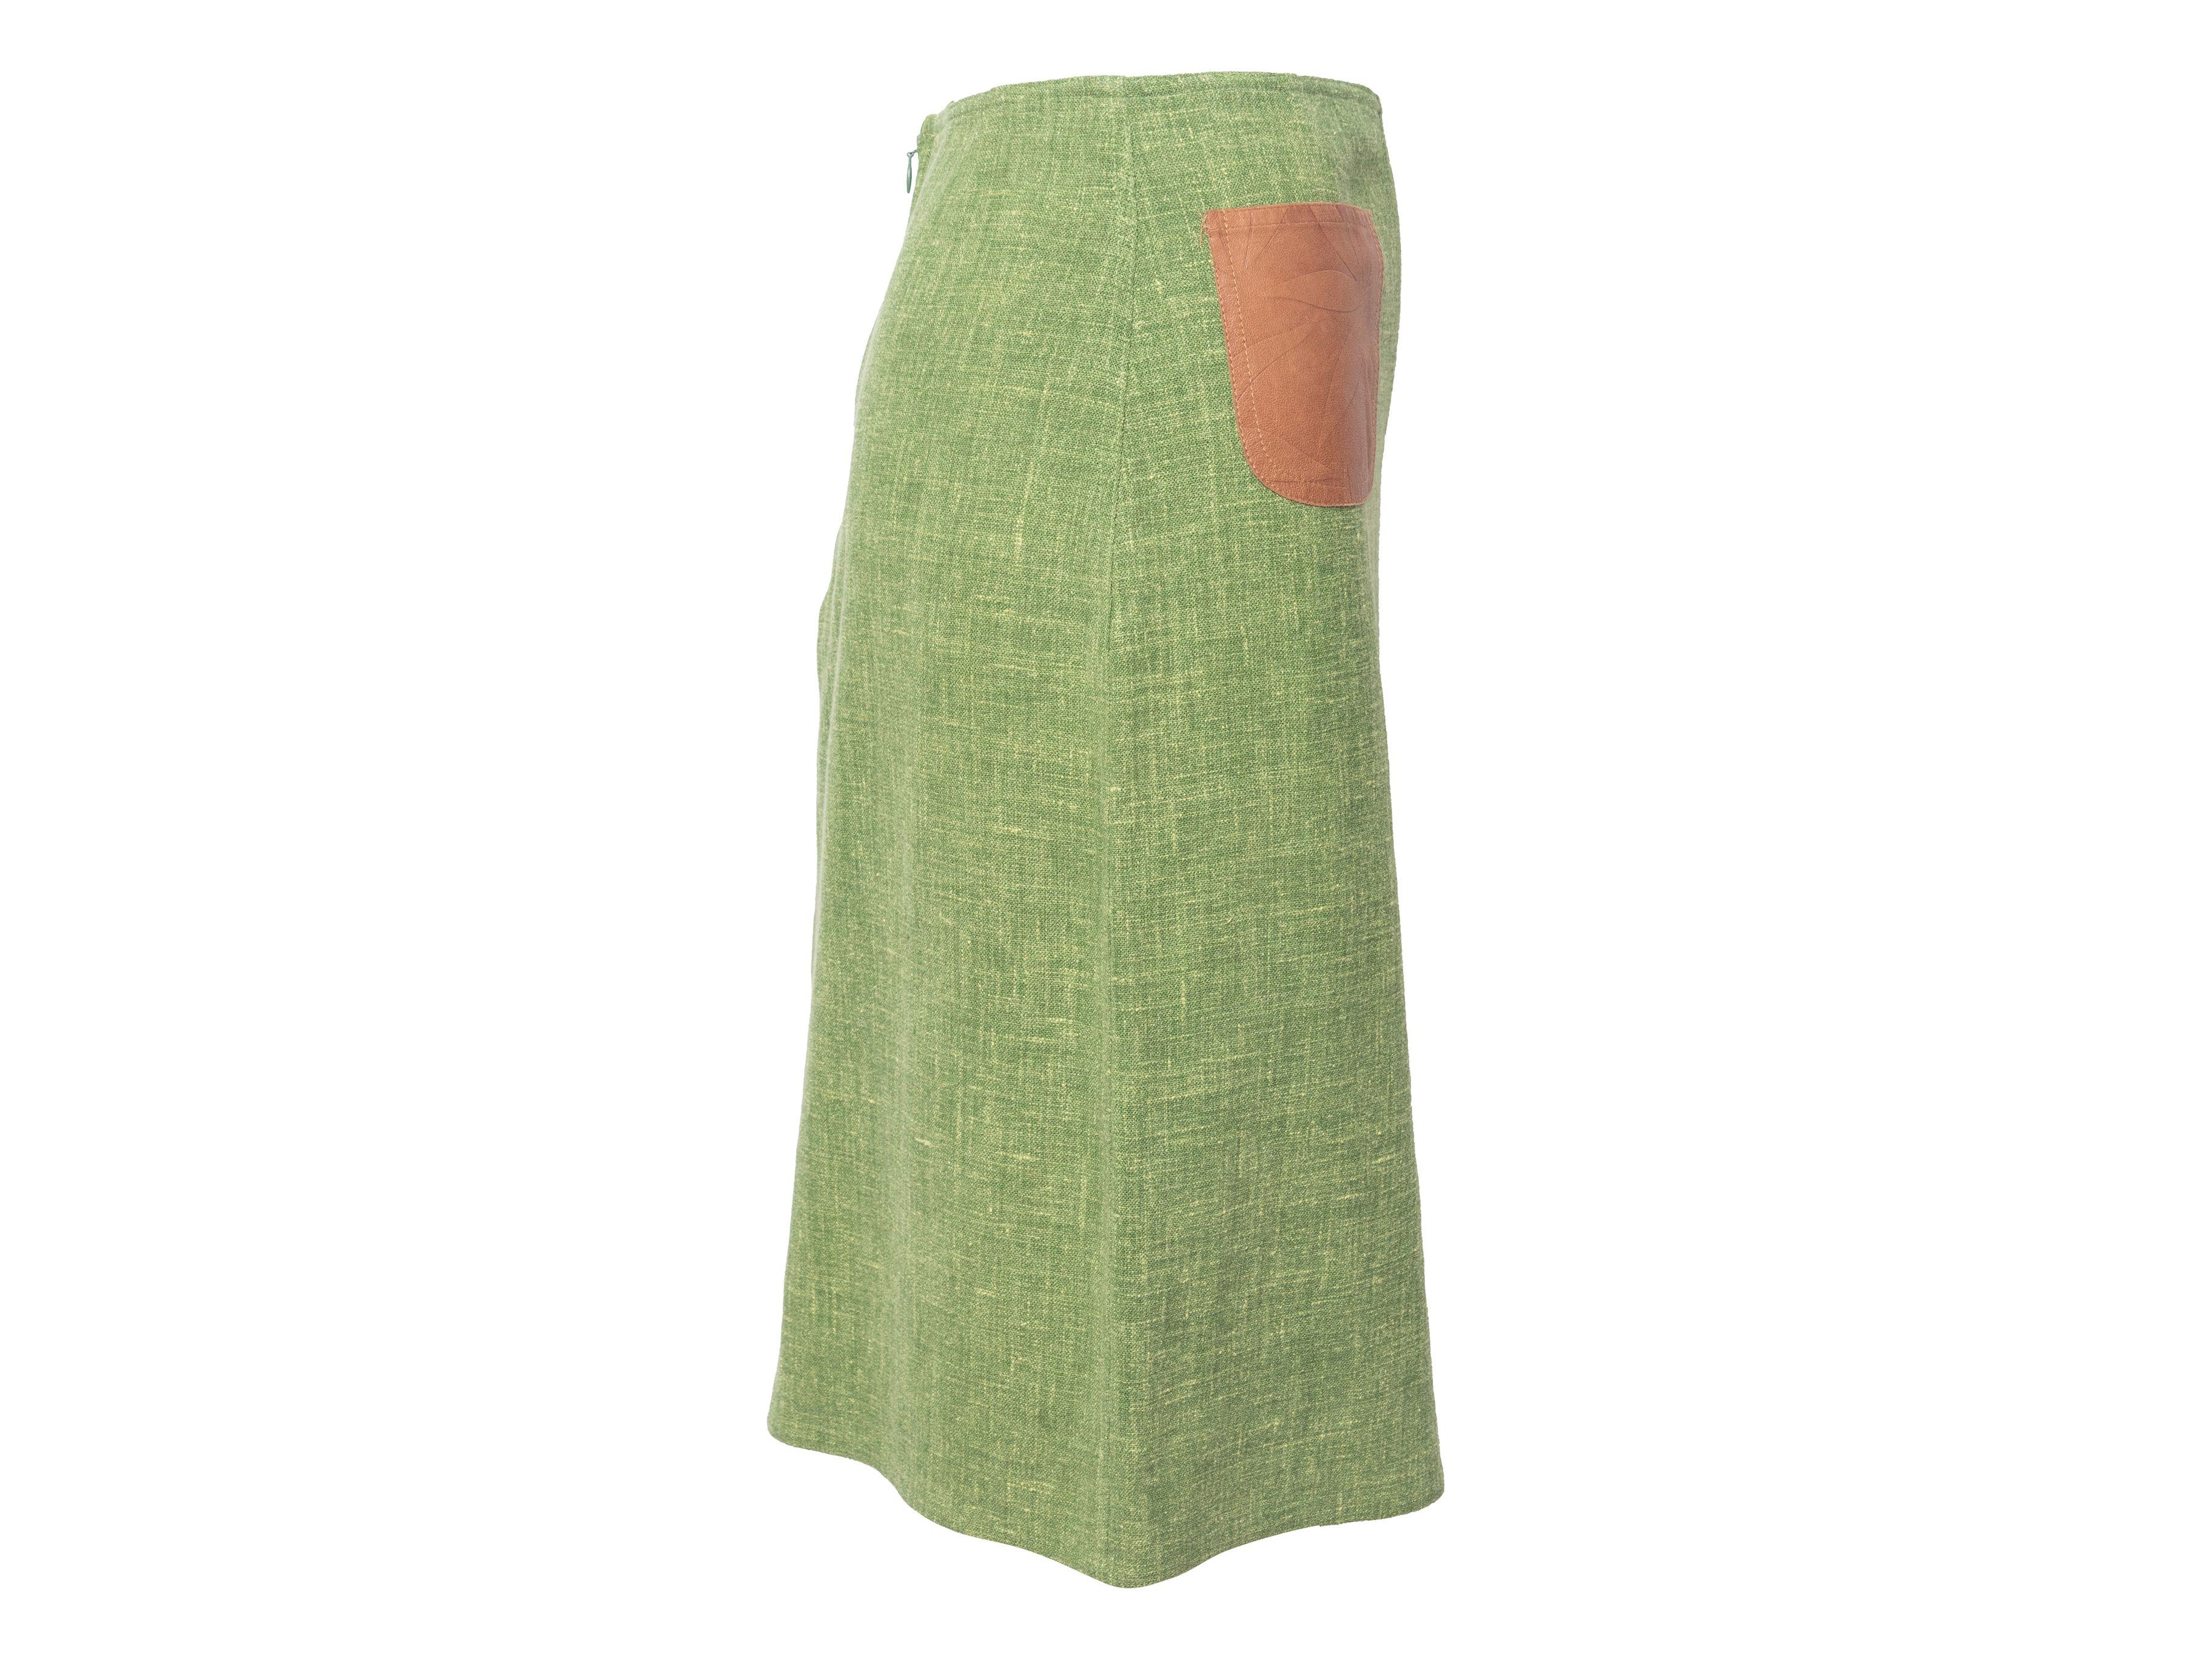 Christian Dior Vintage Green & Tan Linen & Leather Skirt 1